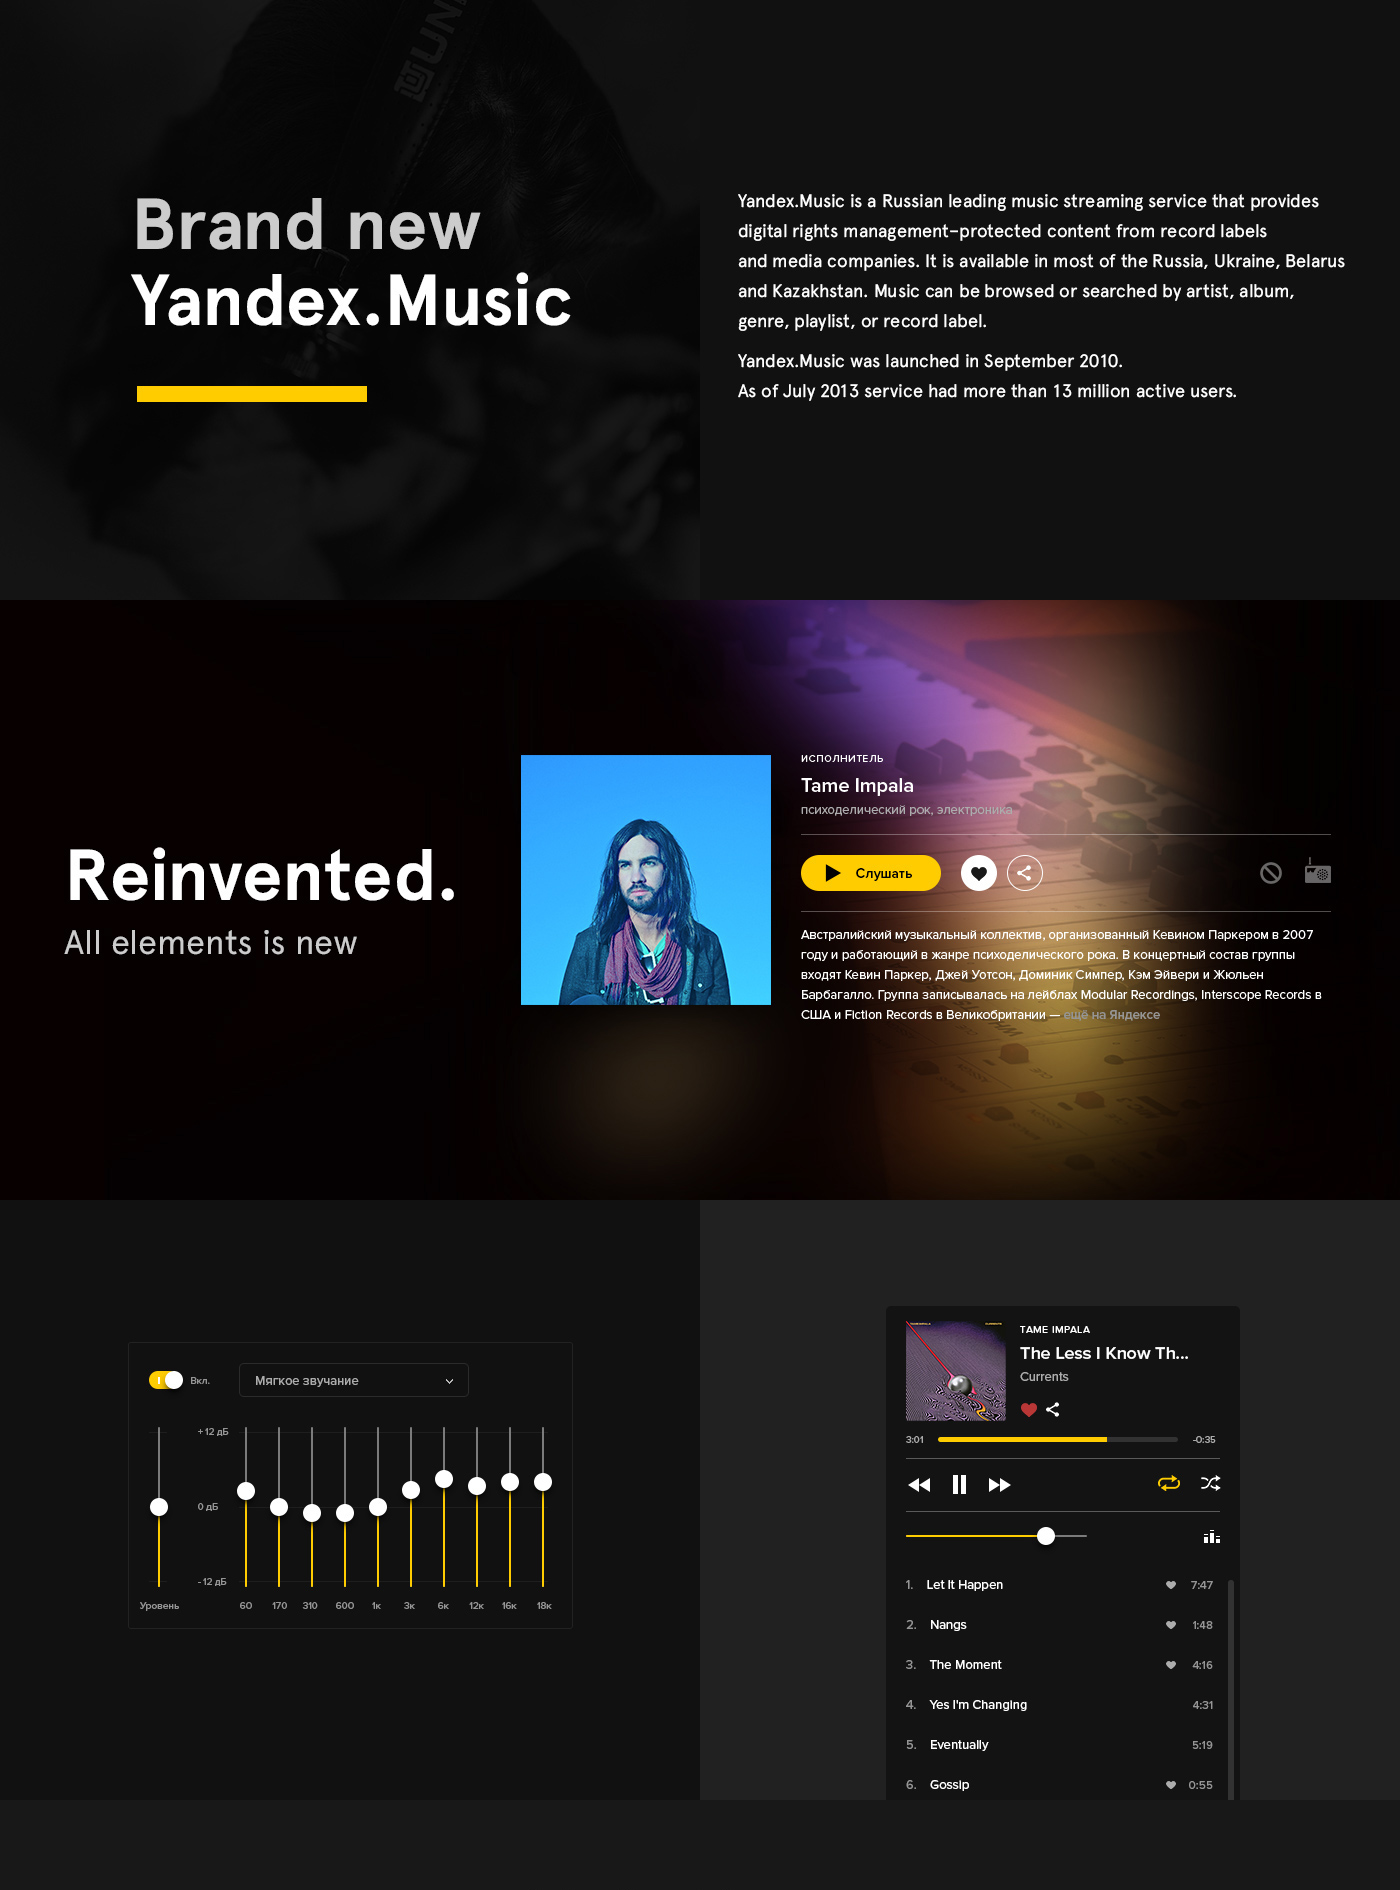 yandex online music Streaming stream Yandex Music UI Tame Impala lonerism